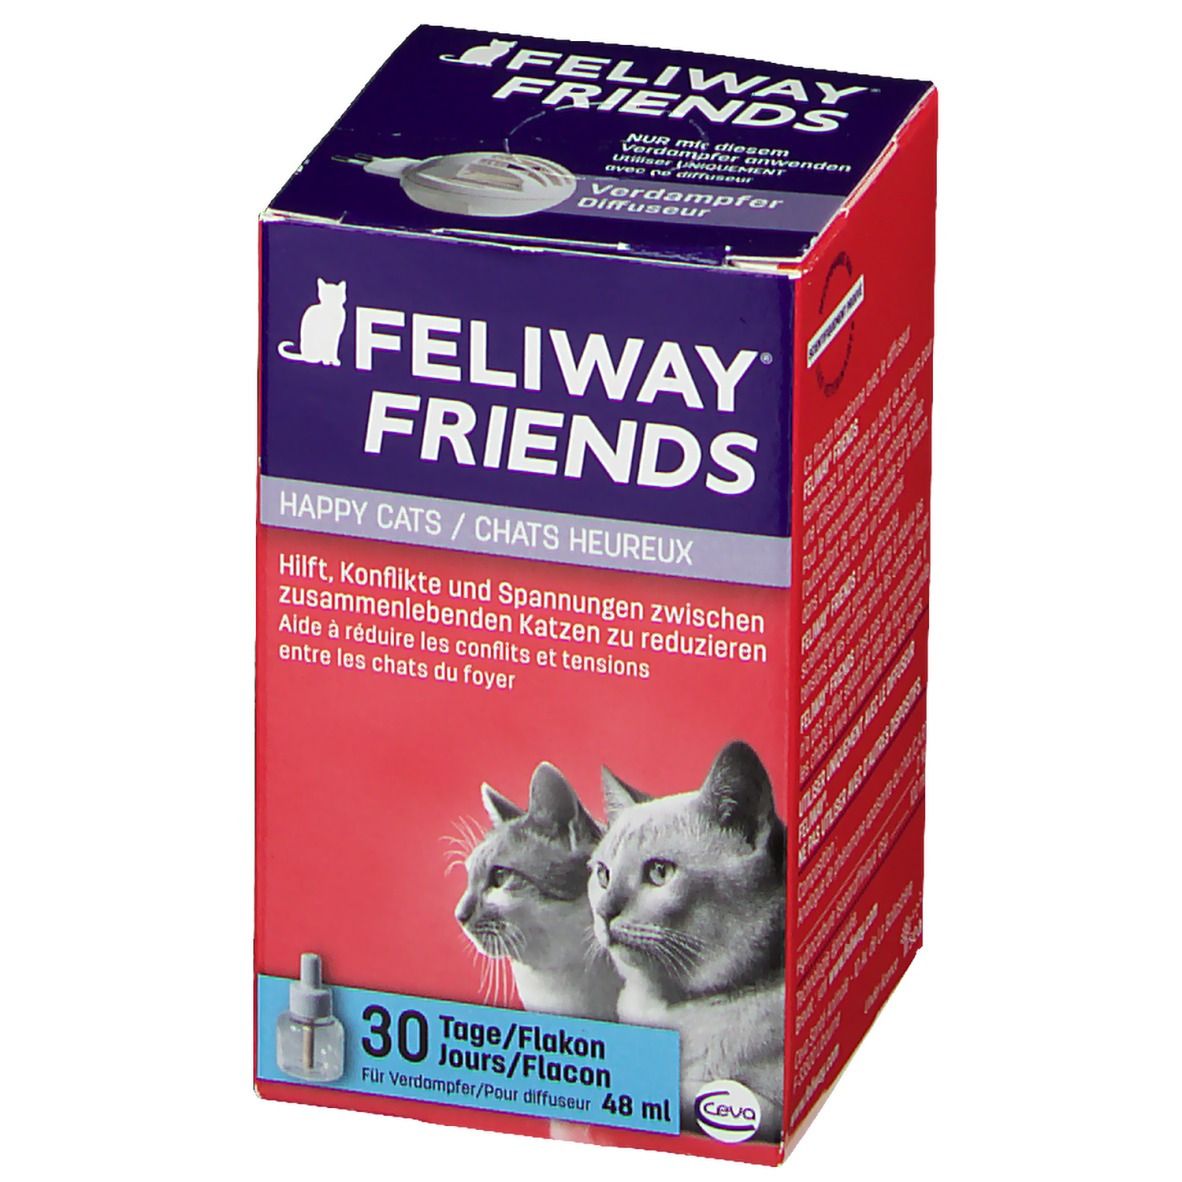 Feliway® Friends Nachfüllflakon